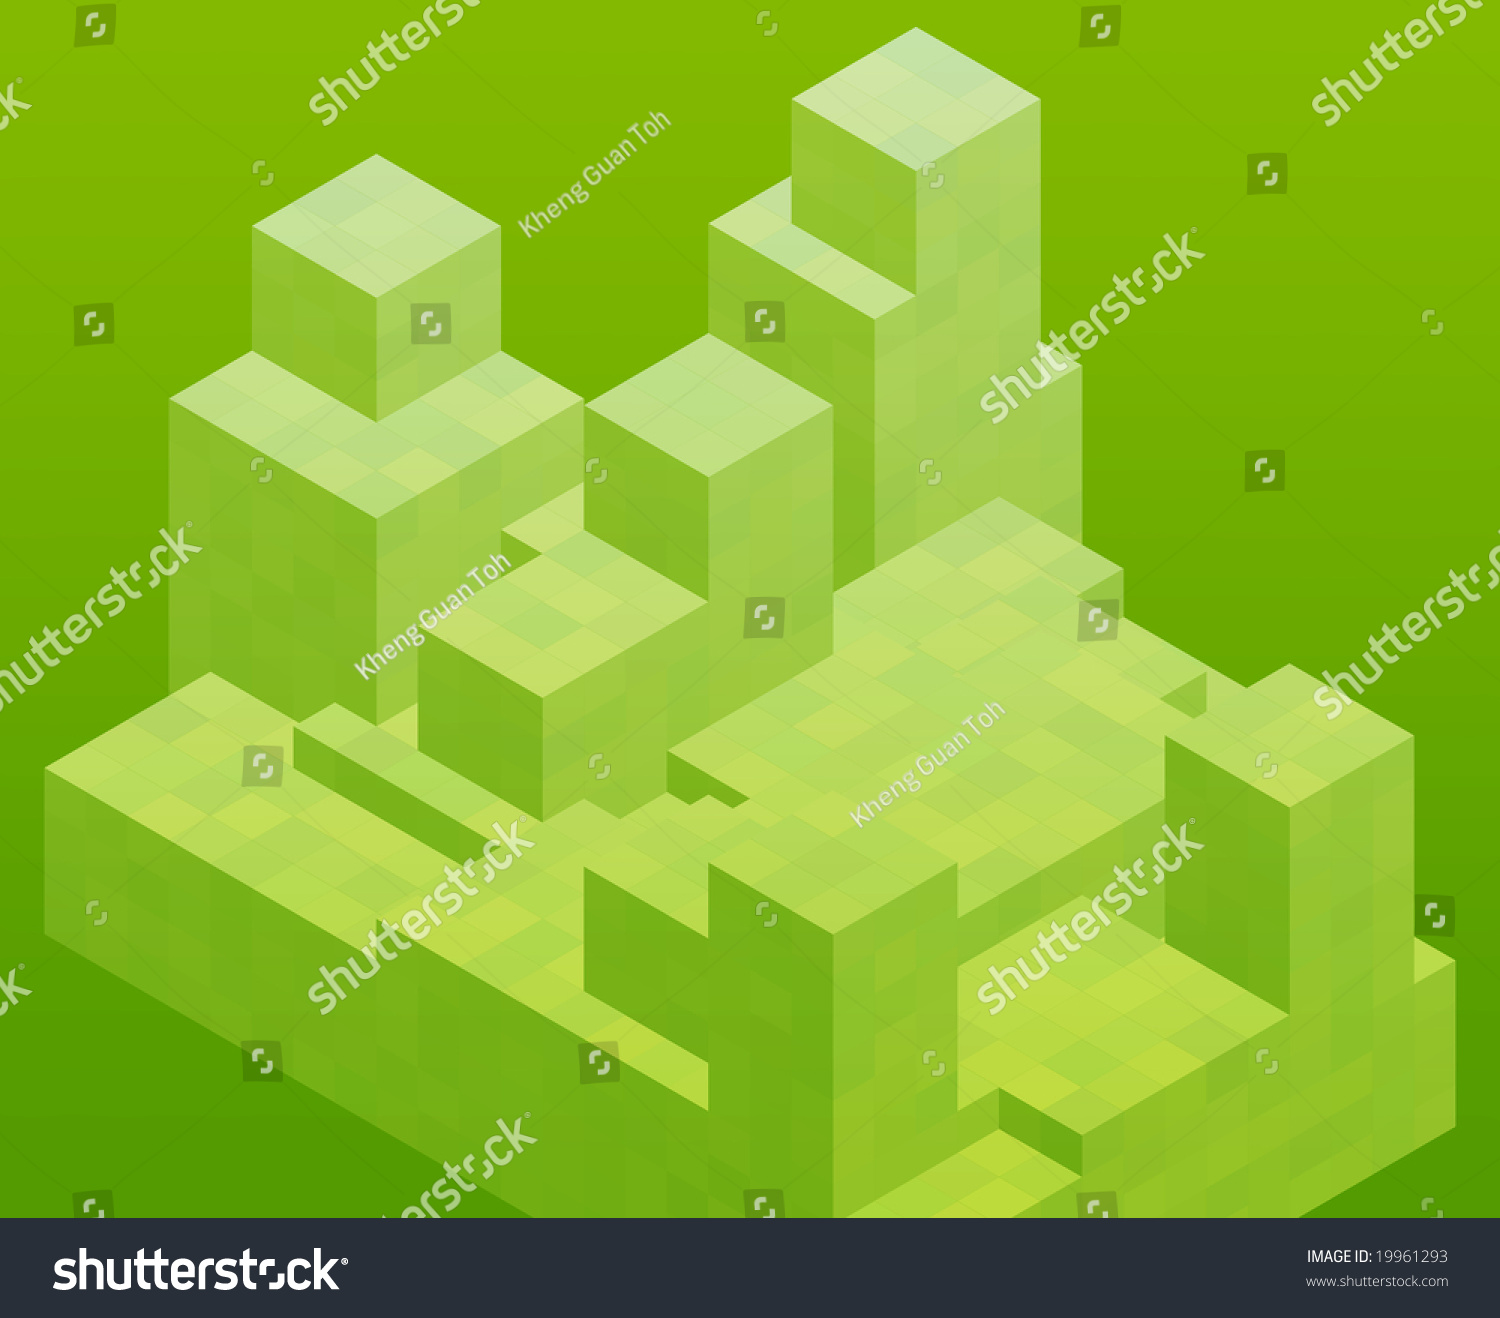 geometric shape blocks